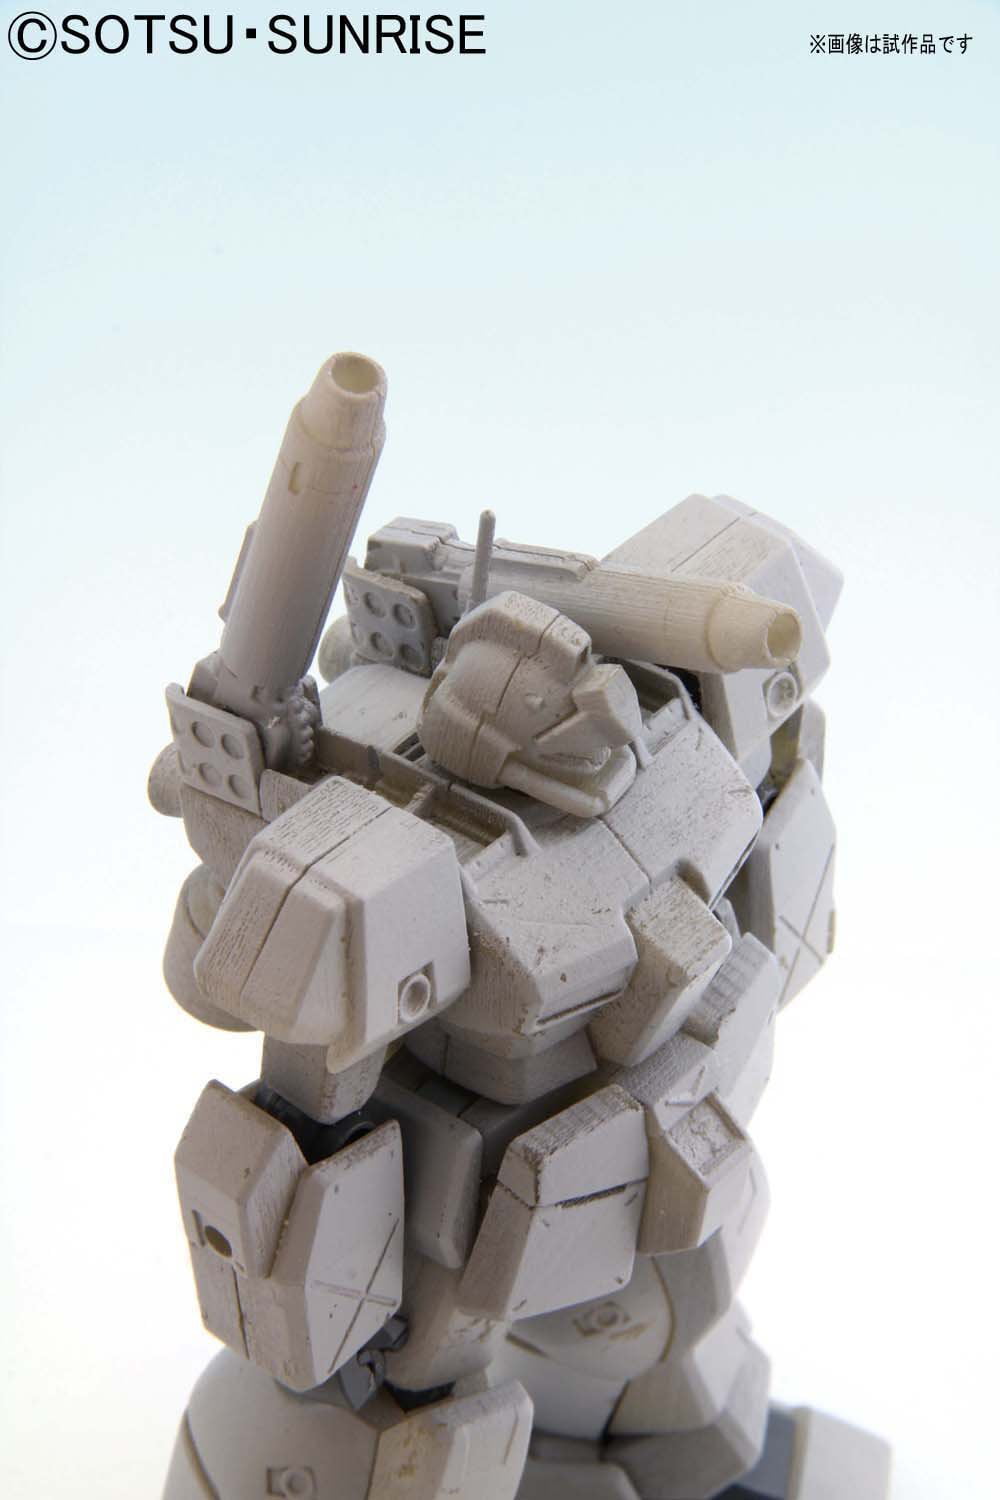 Bandai Hobby HGUC 1//144 #125 Gm Cannon II Mobile Suit Gundam 0083 Stardust Memory Model Kit